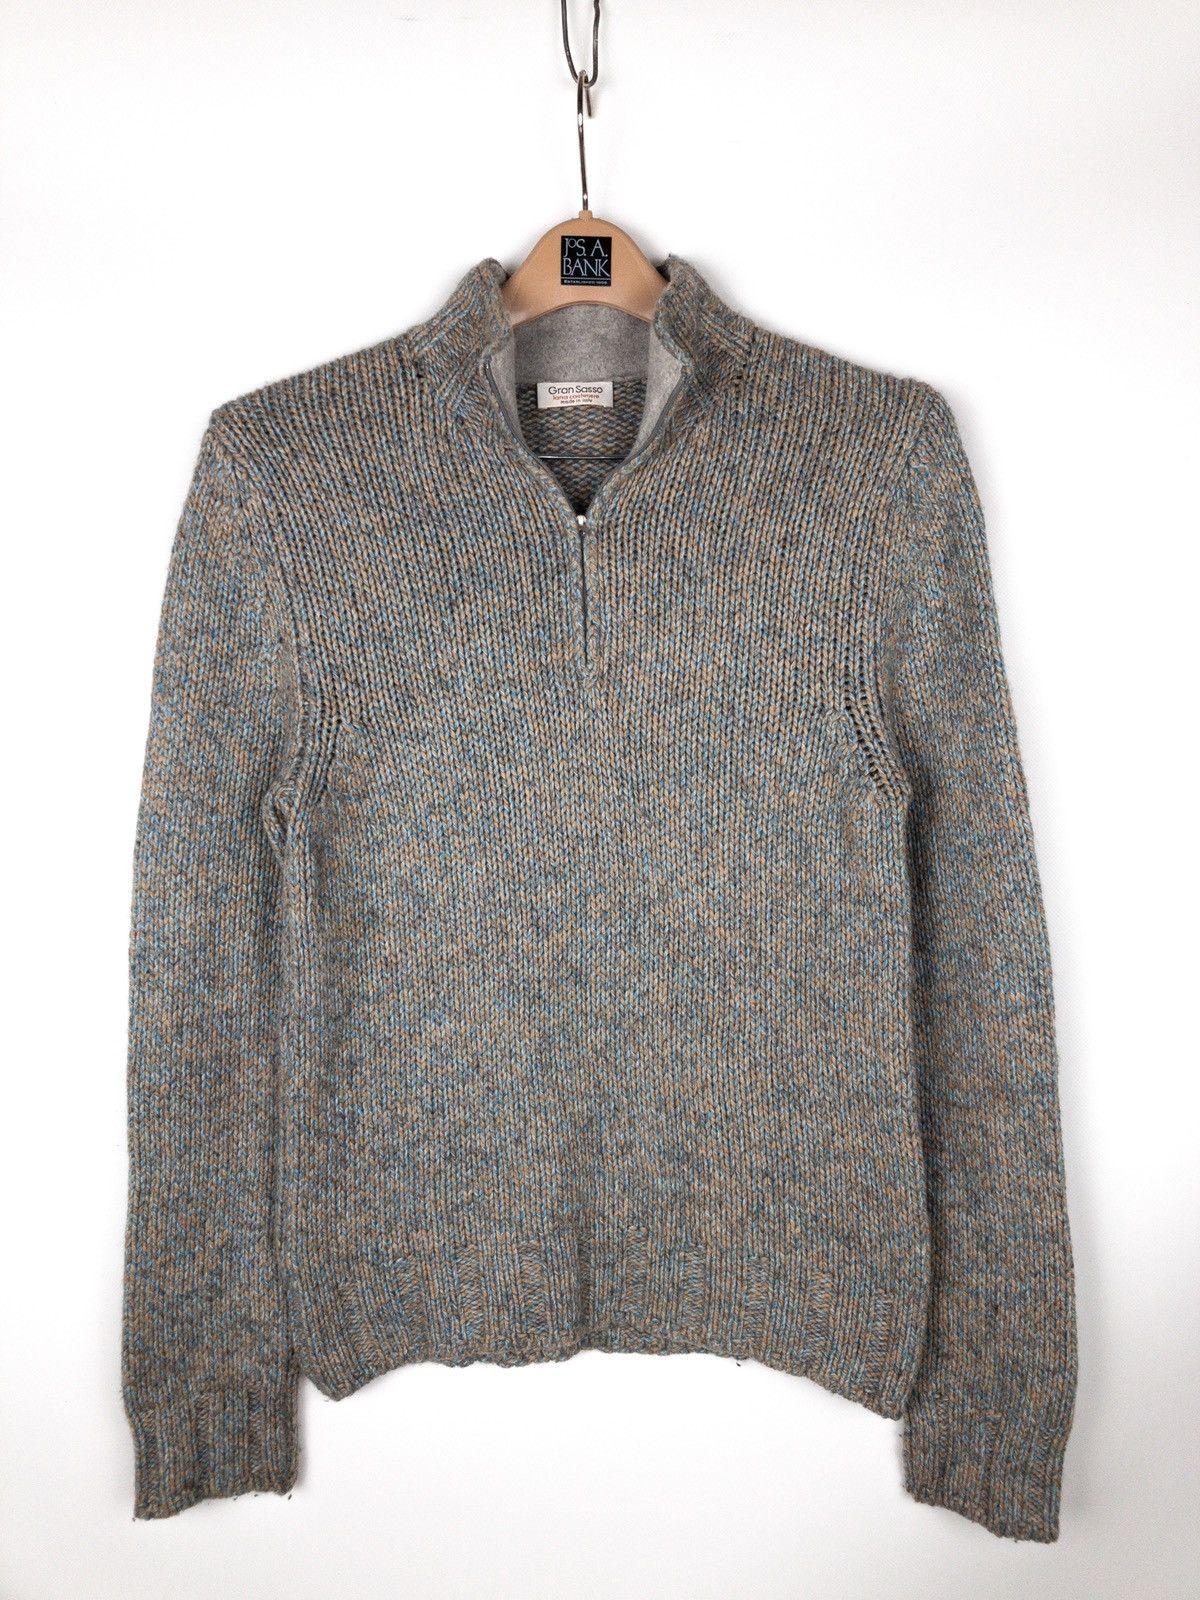 Vintage Vintage Lana Cashmere Gran Sasso 1/4 zip sweater | Grailed